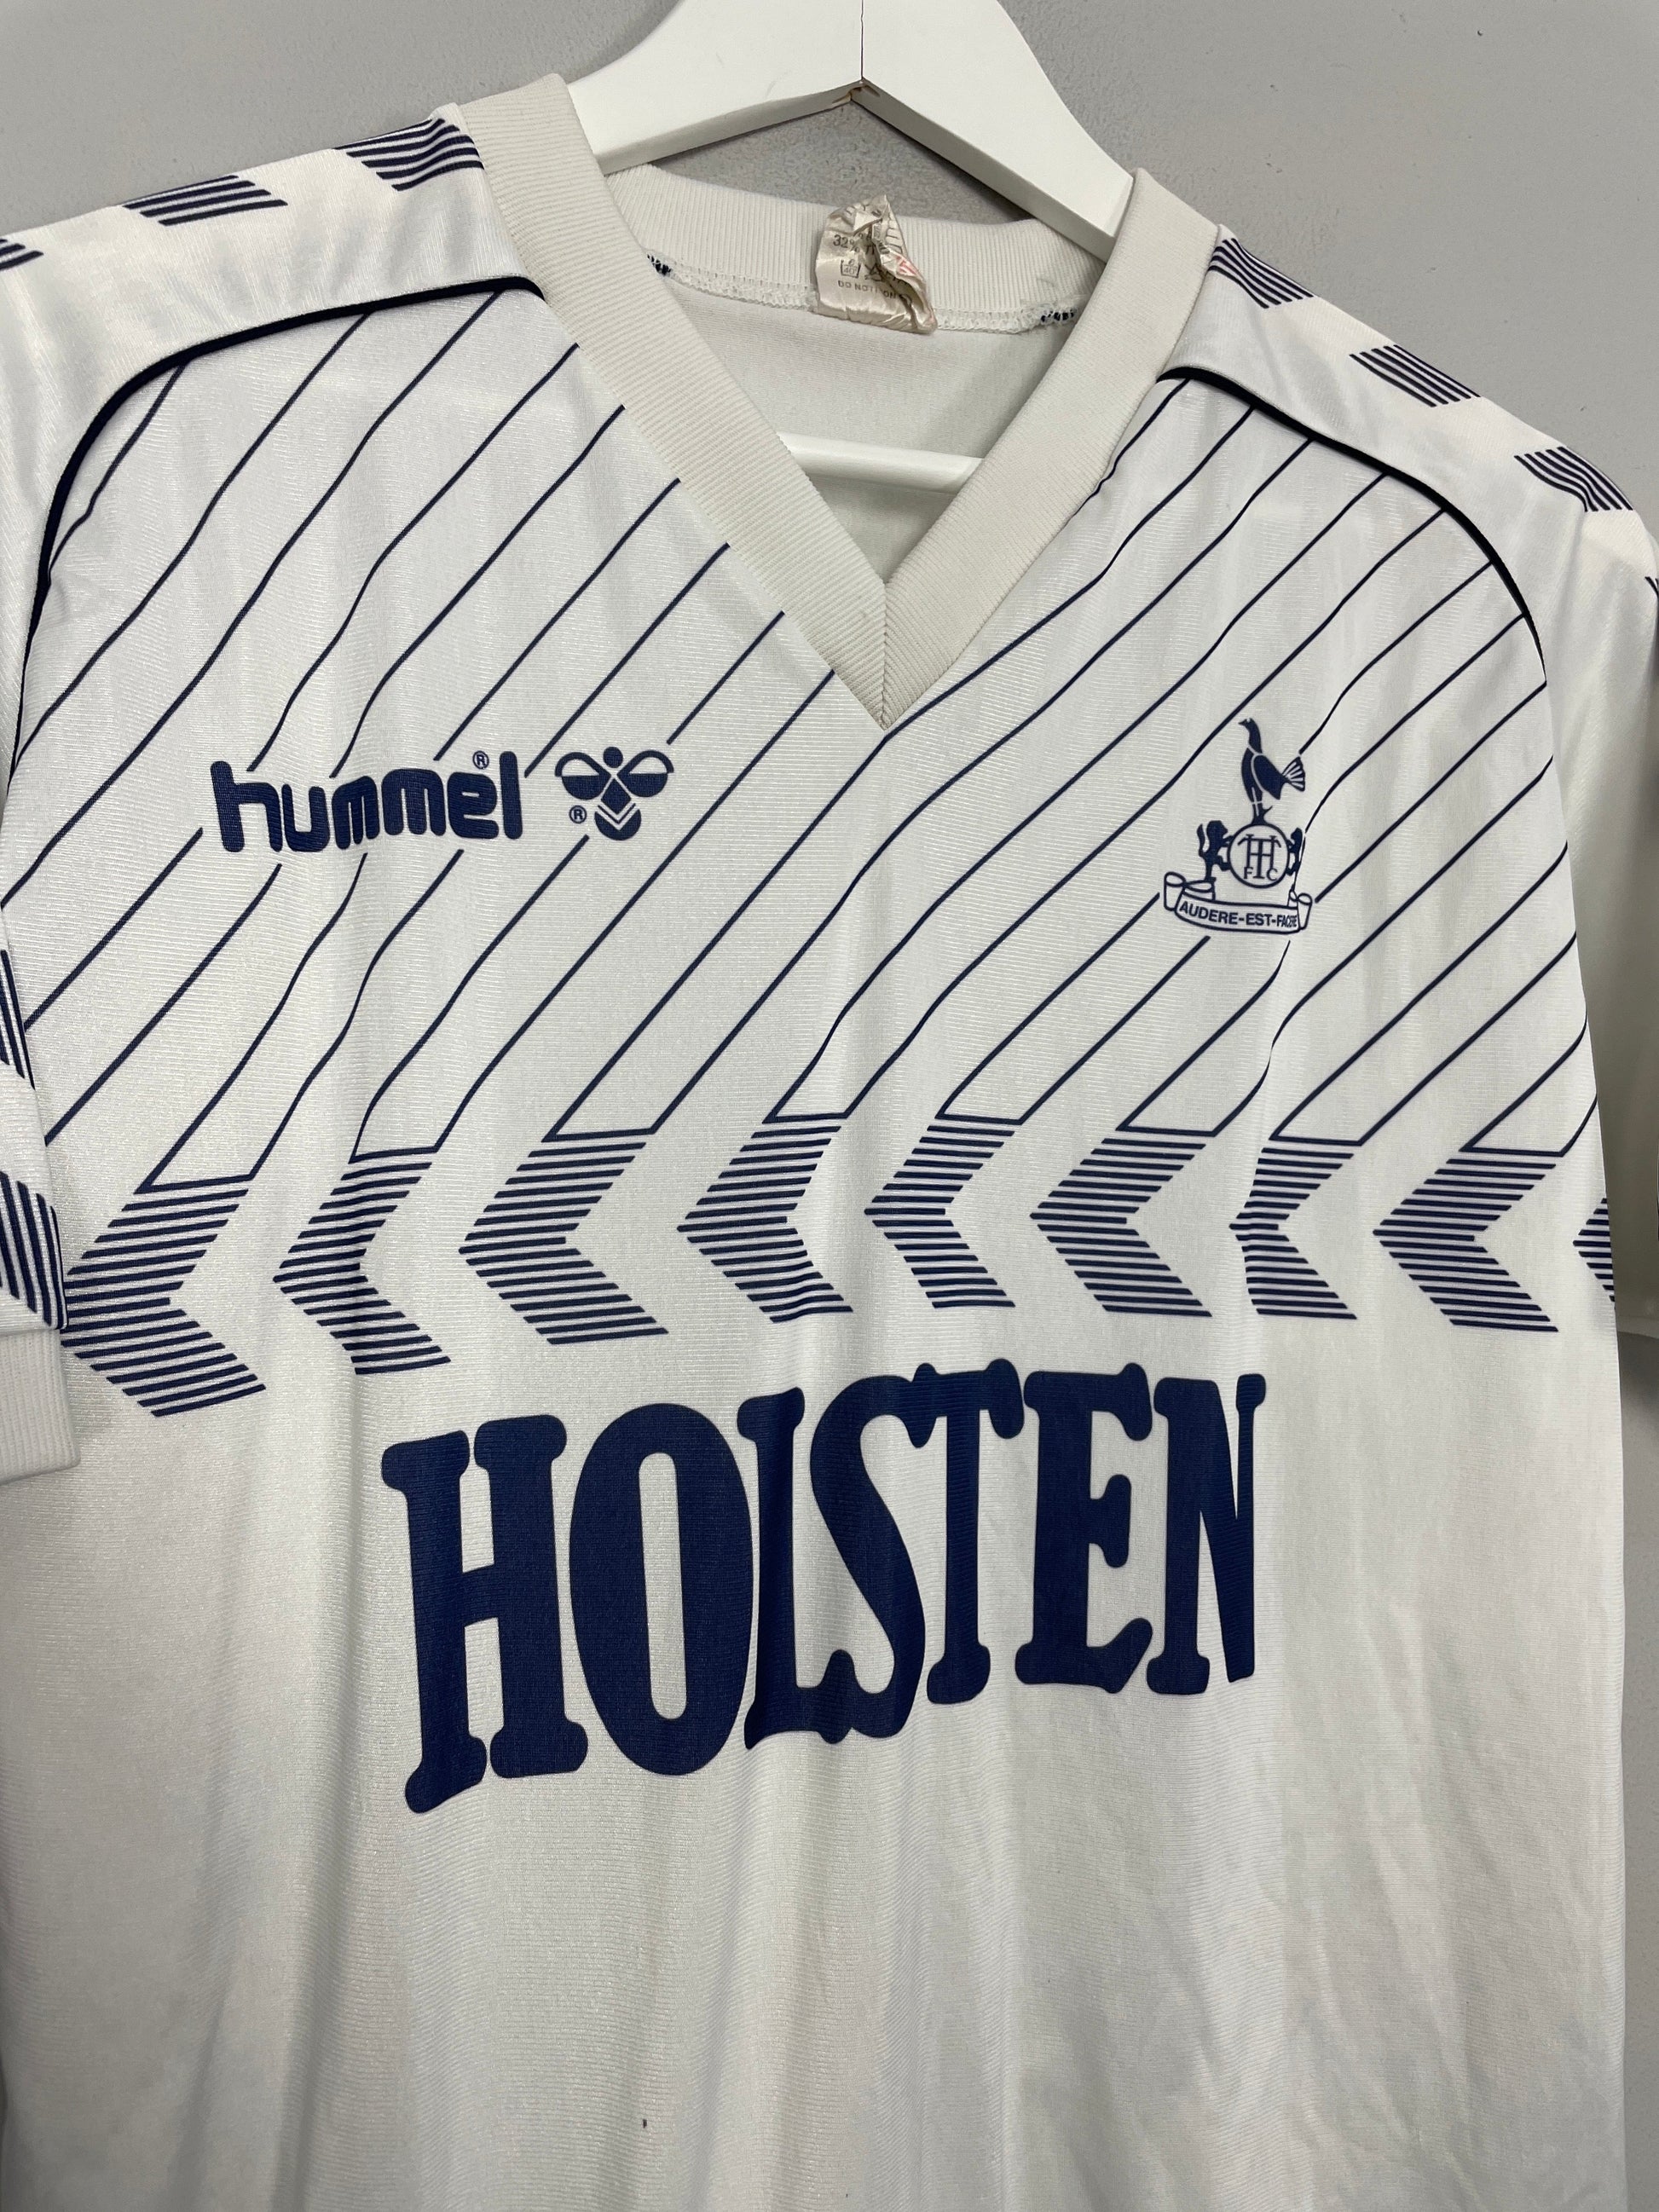 Tottenham is selling old Hummel shirts